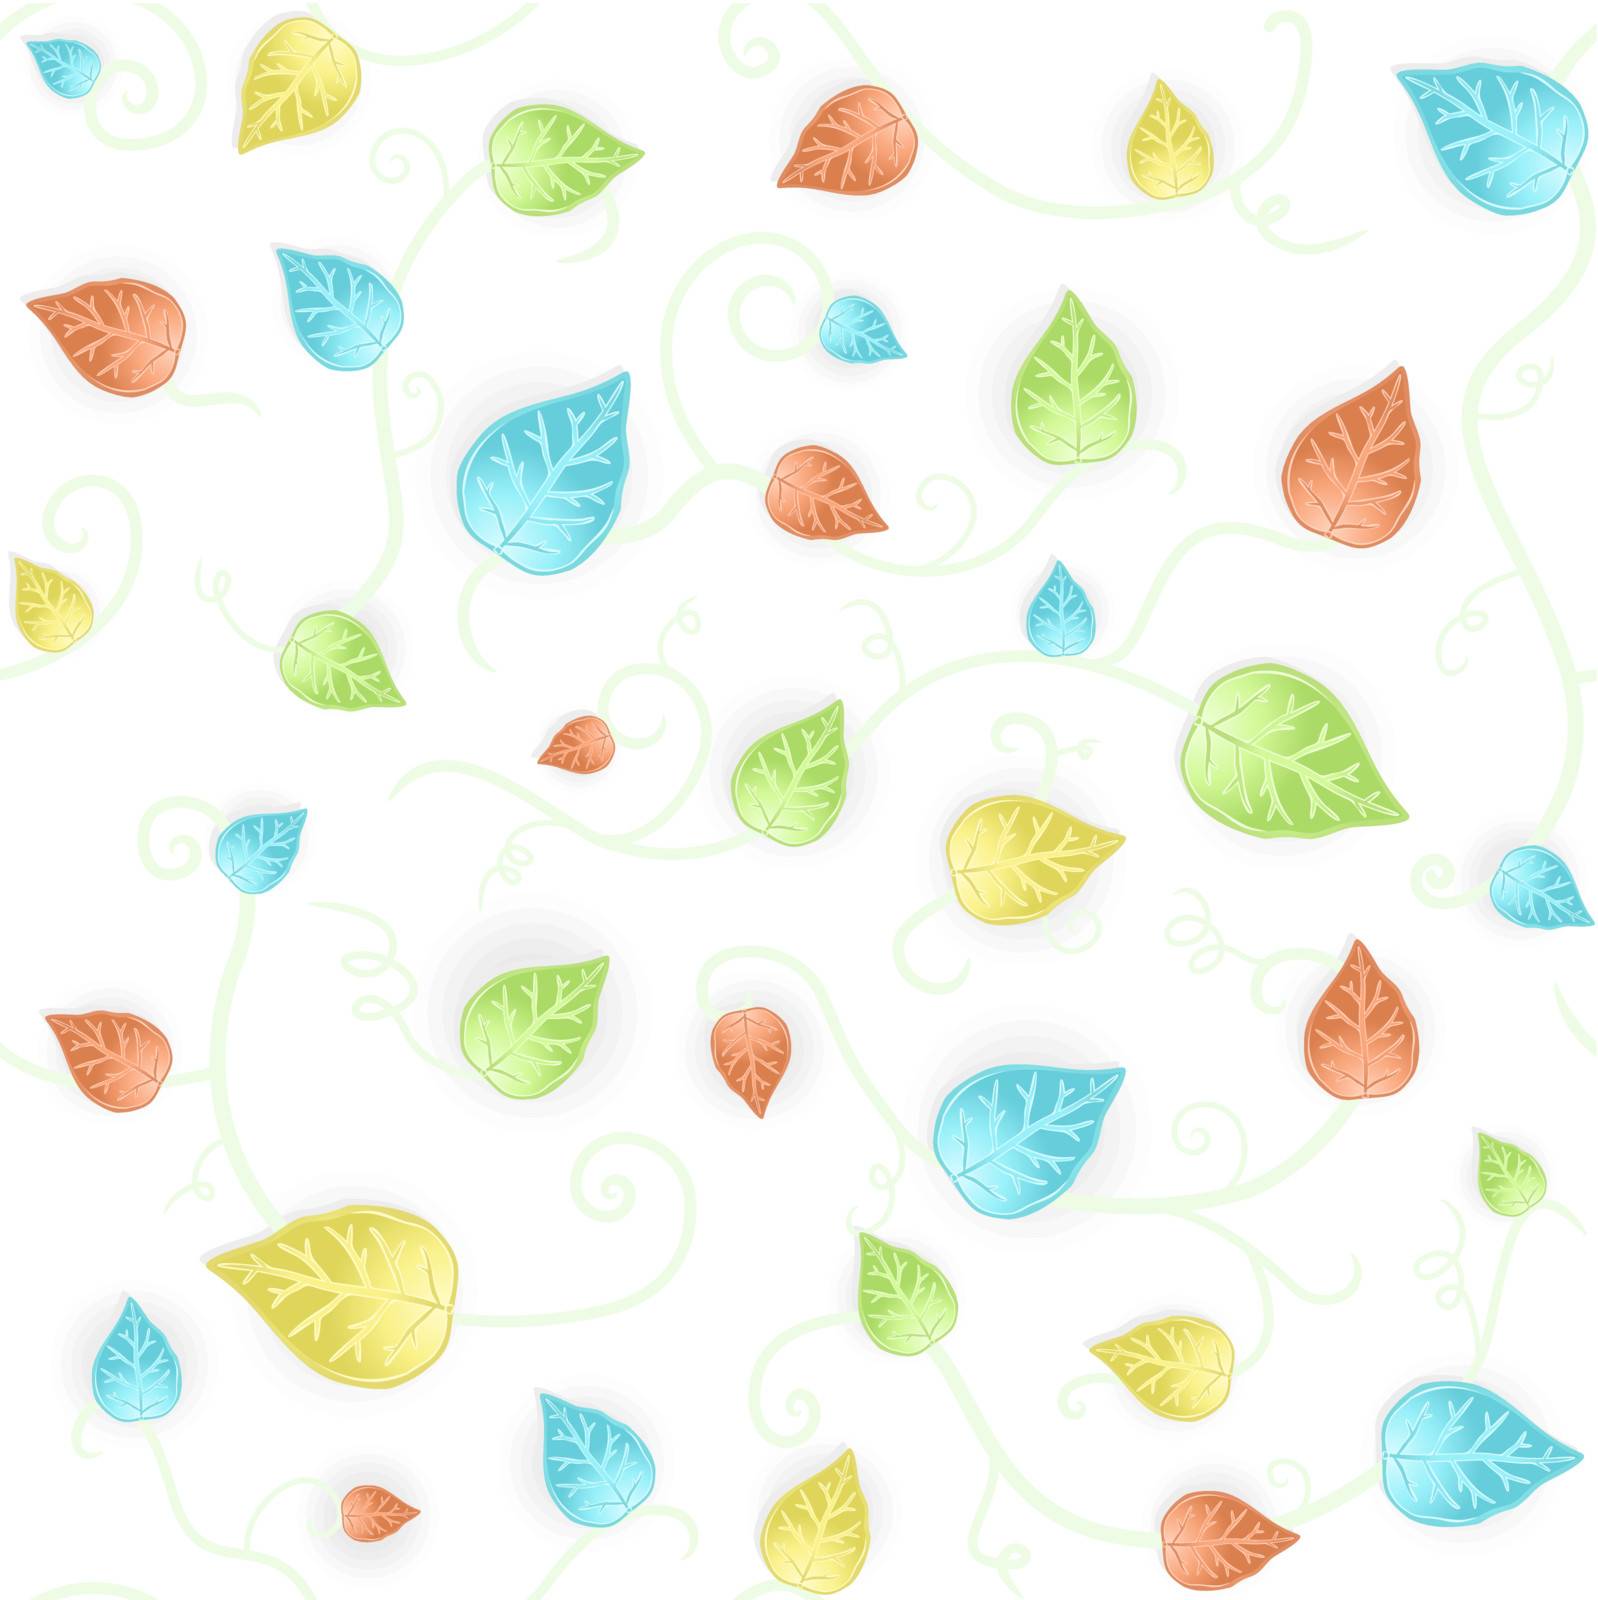 Autumn leafy seamless pattern by domencolja